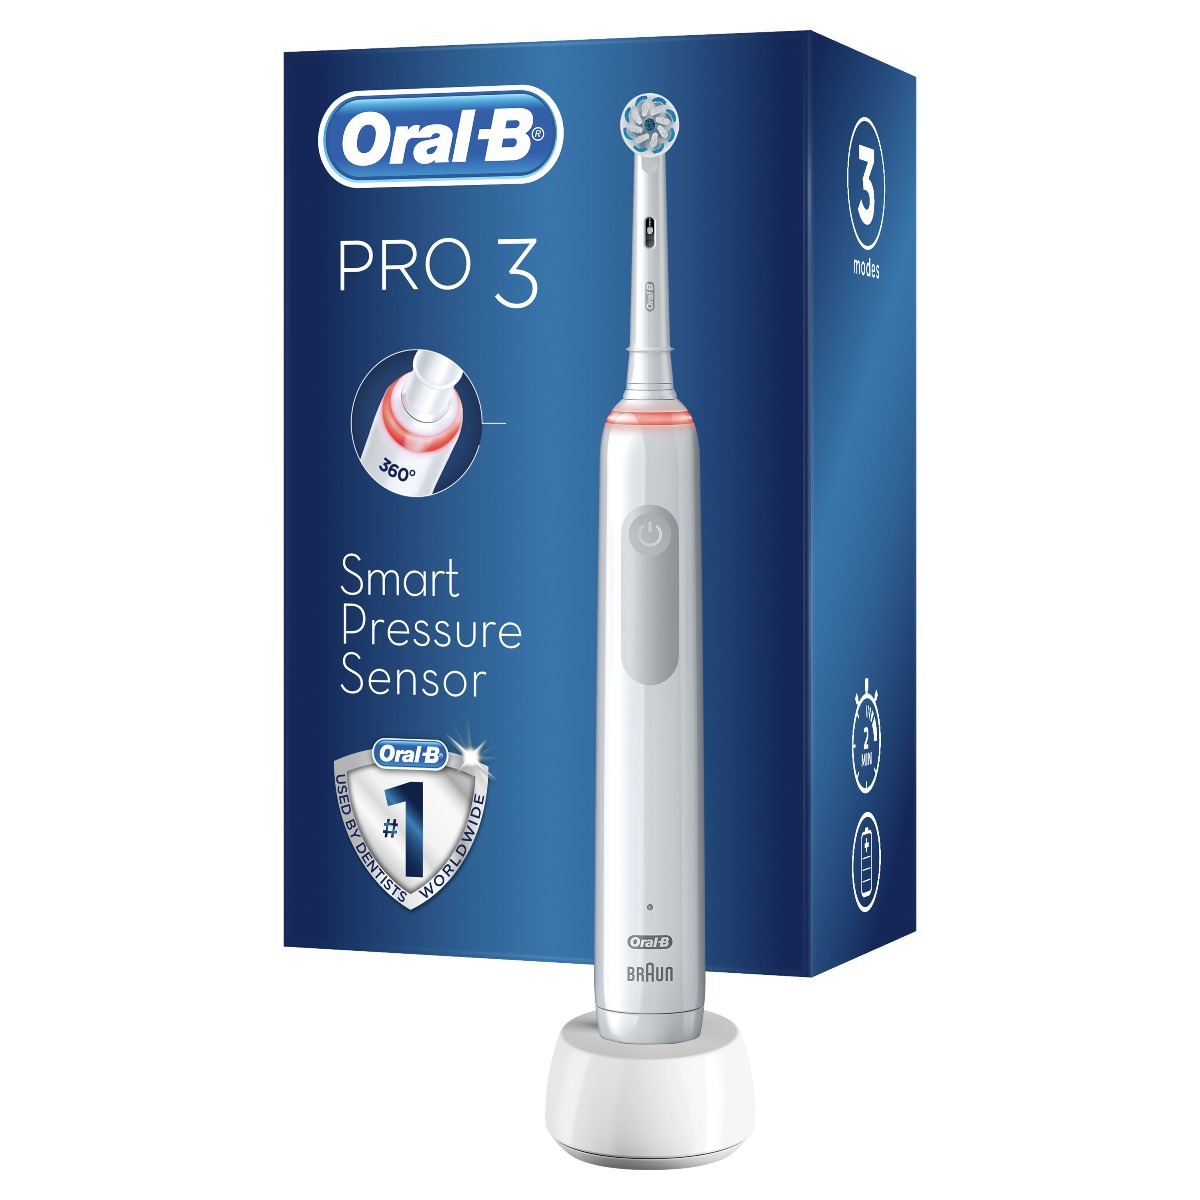 Oral-B PRO 3 3000 Sensitive Clean elektrický zubní kartáček Oral-B